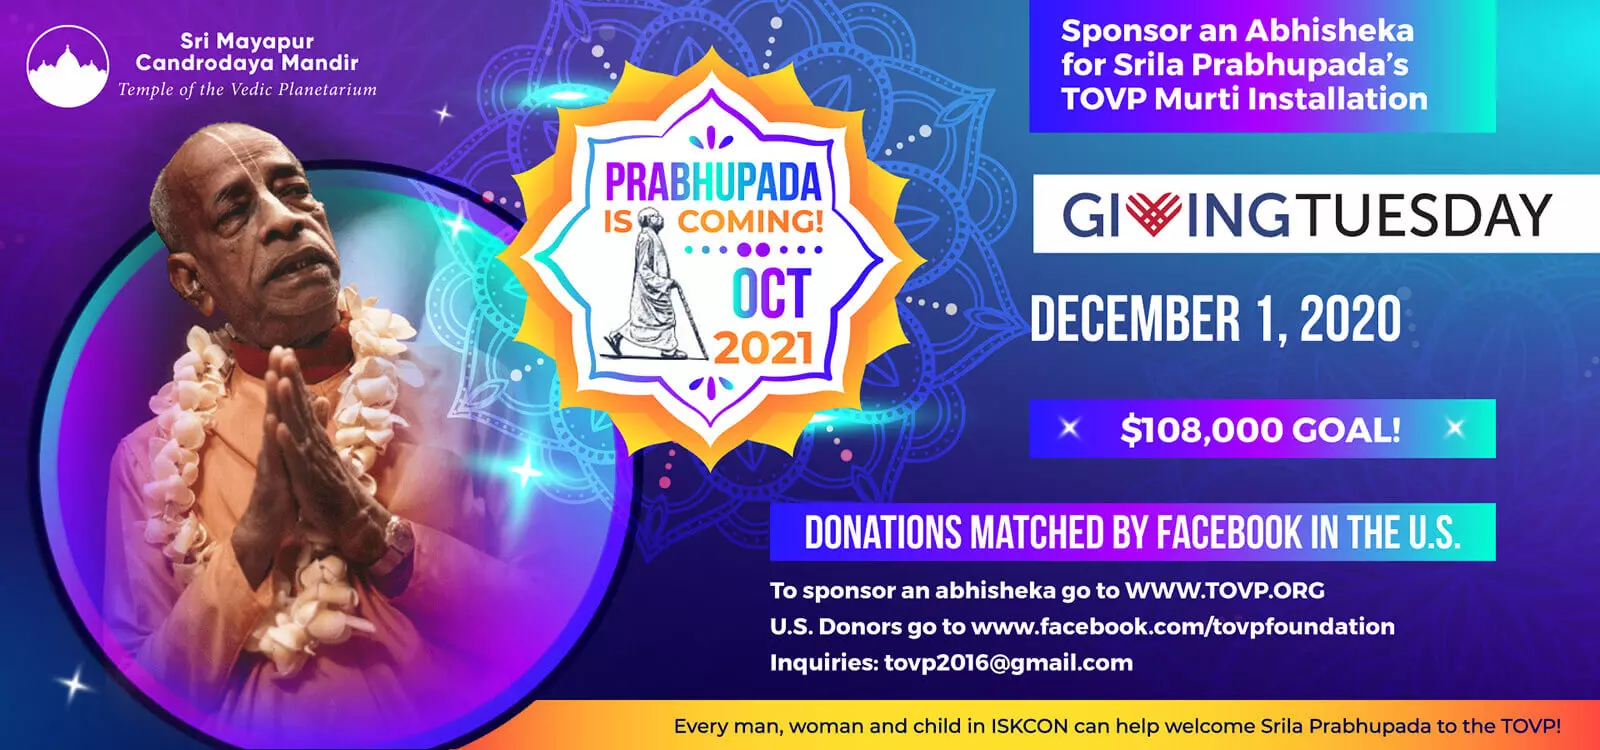 TOVP #GivingTuesday Fundraiser - December 1, 2020